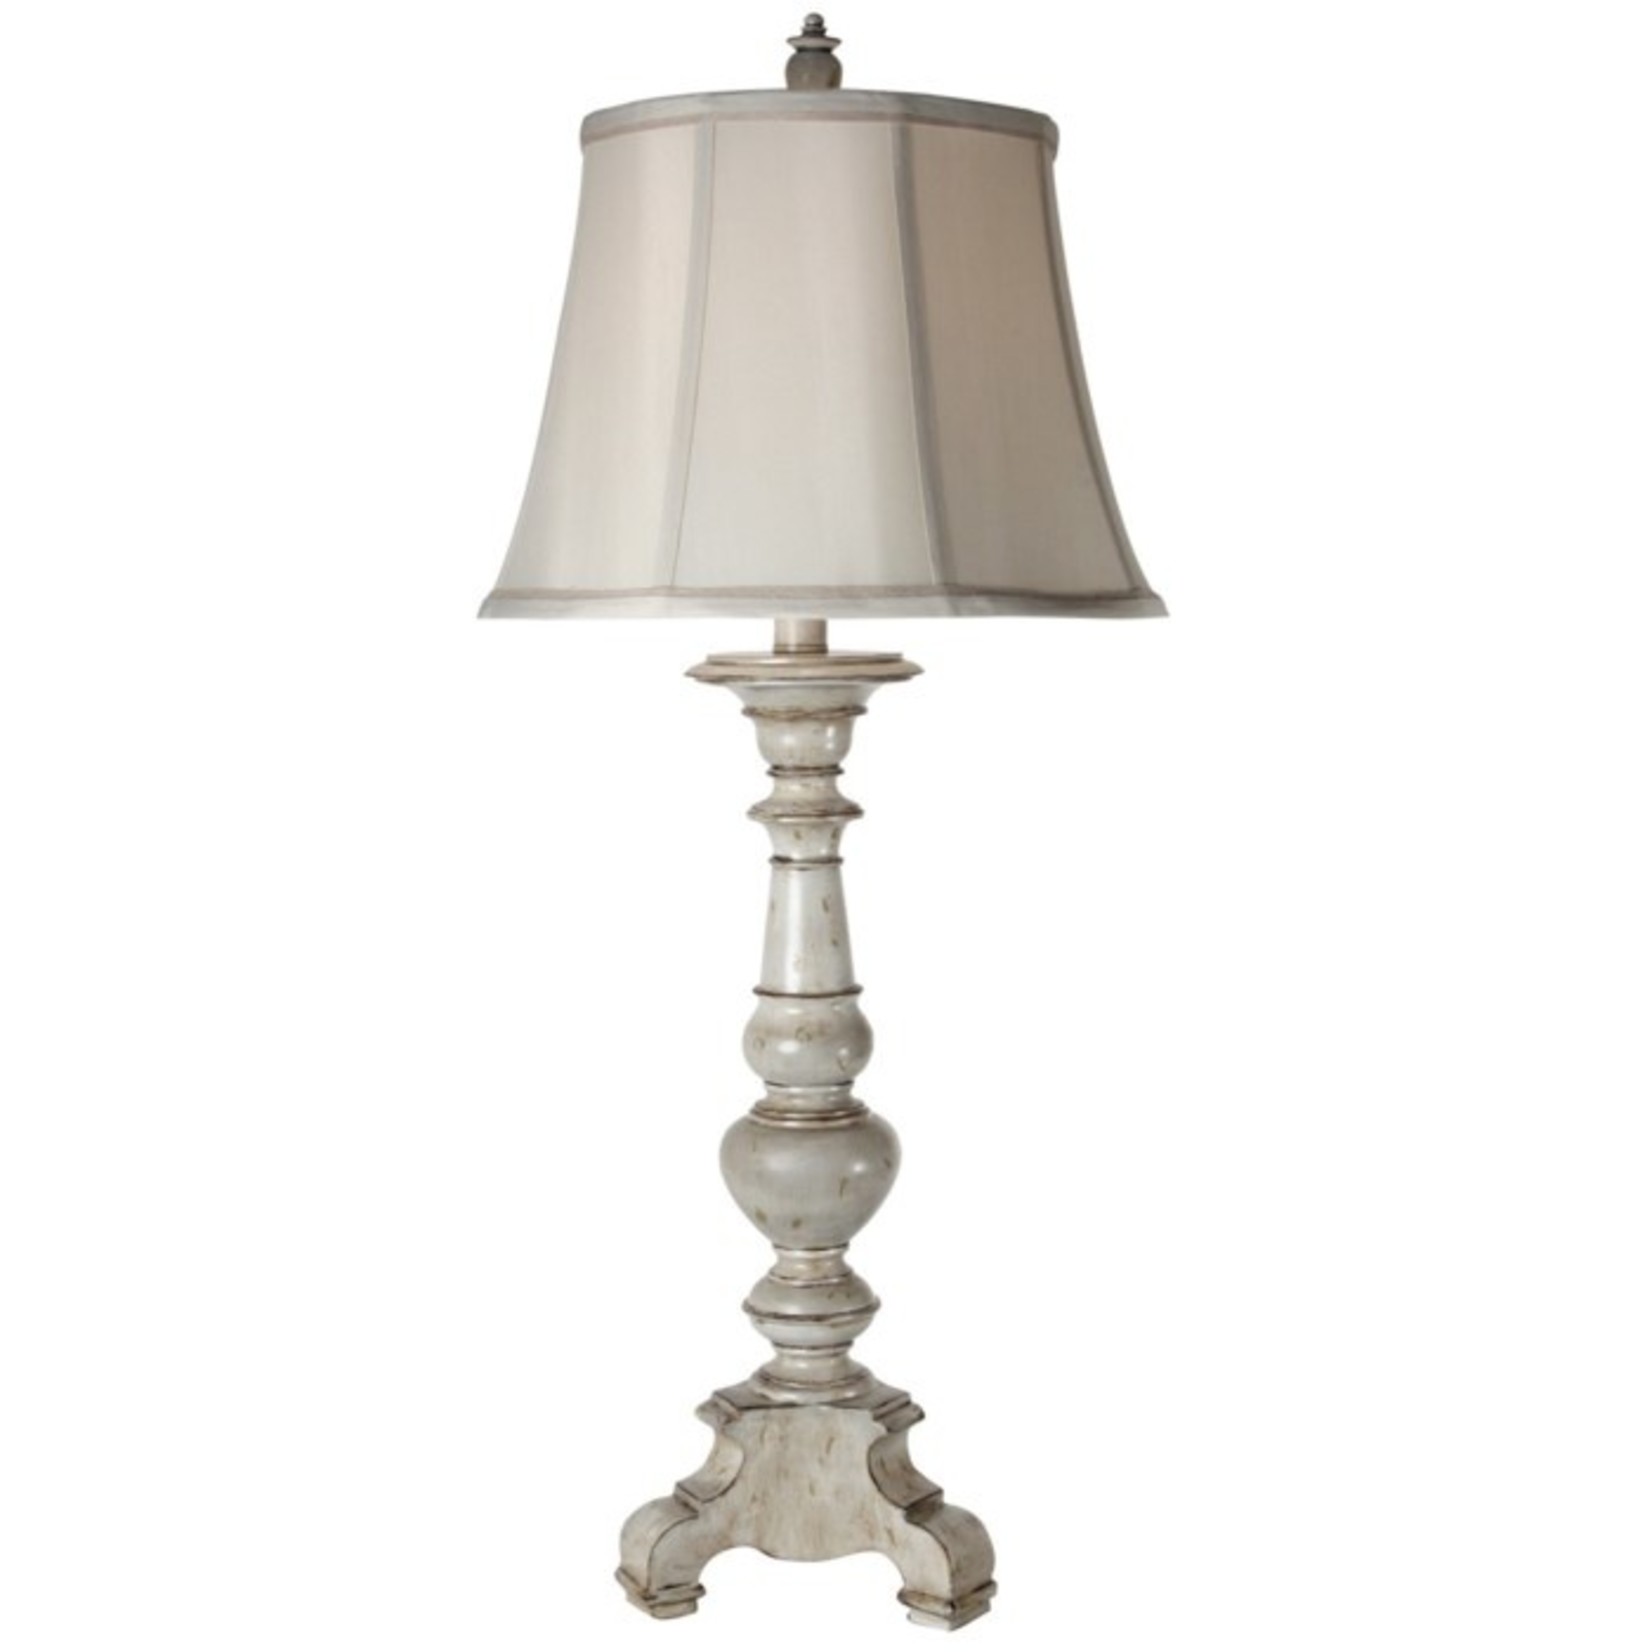 Yorktown White Distressed Table Lamp